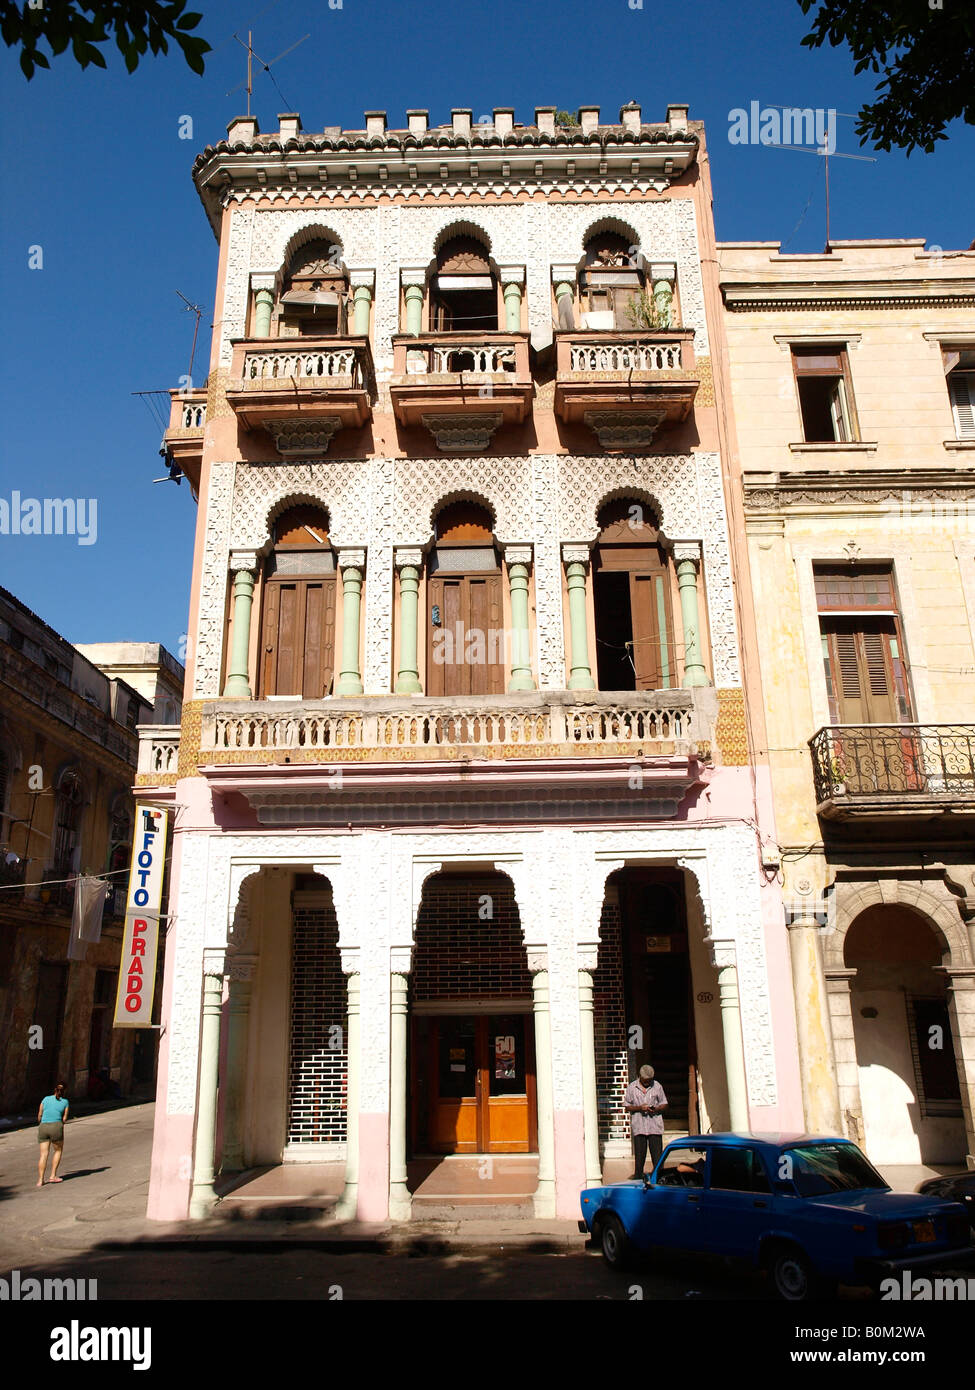 Bâtiment de style mauresque Paseo de Marti (El Prado) La Havane Cuba Banque D'Images